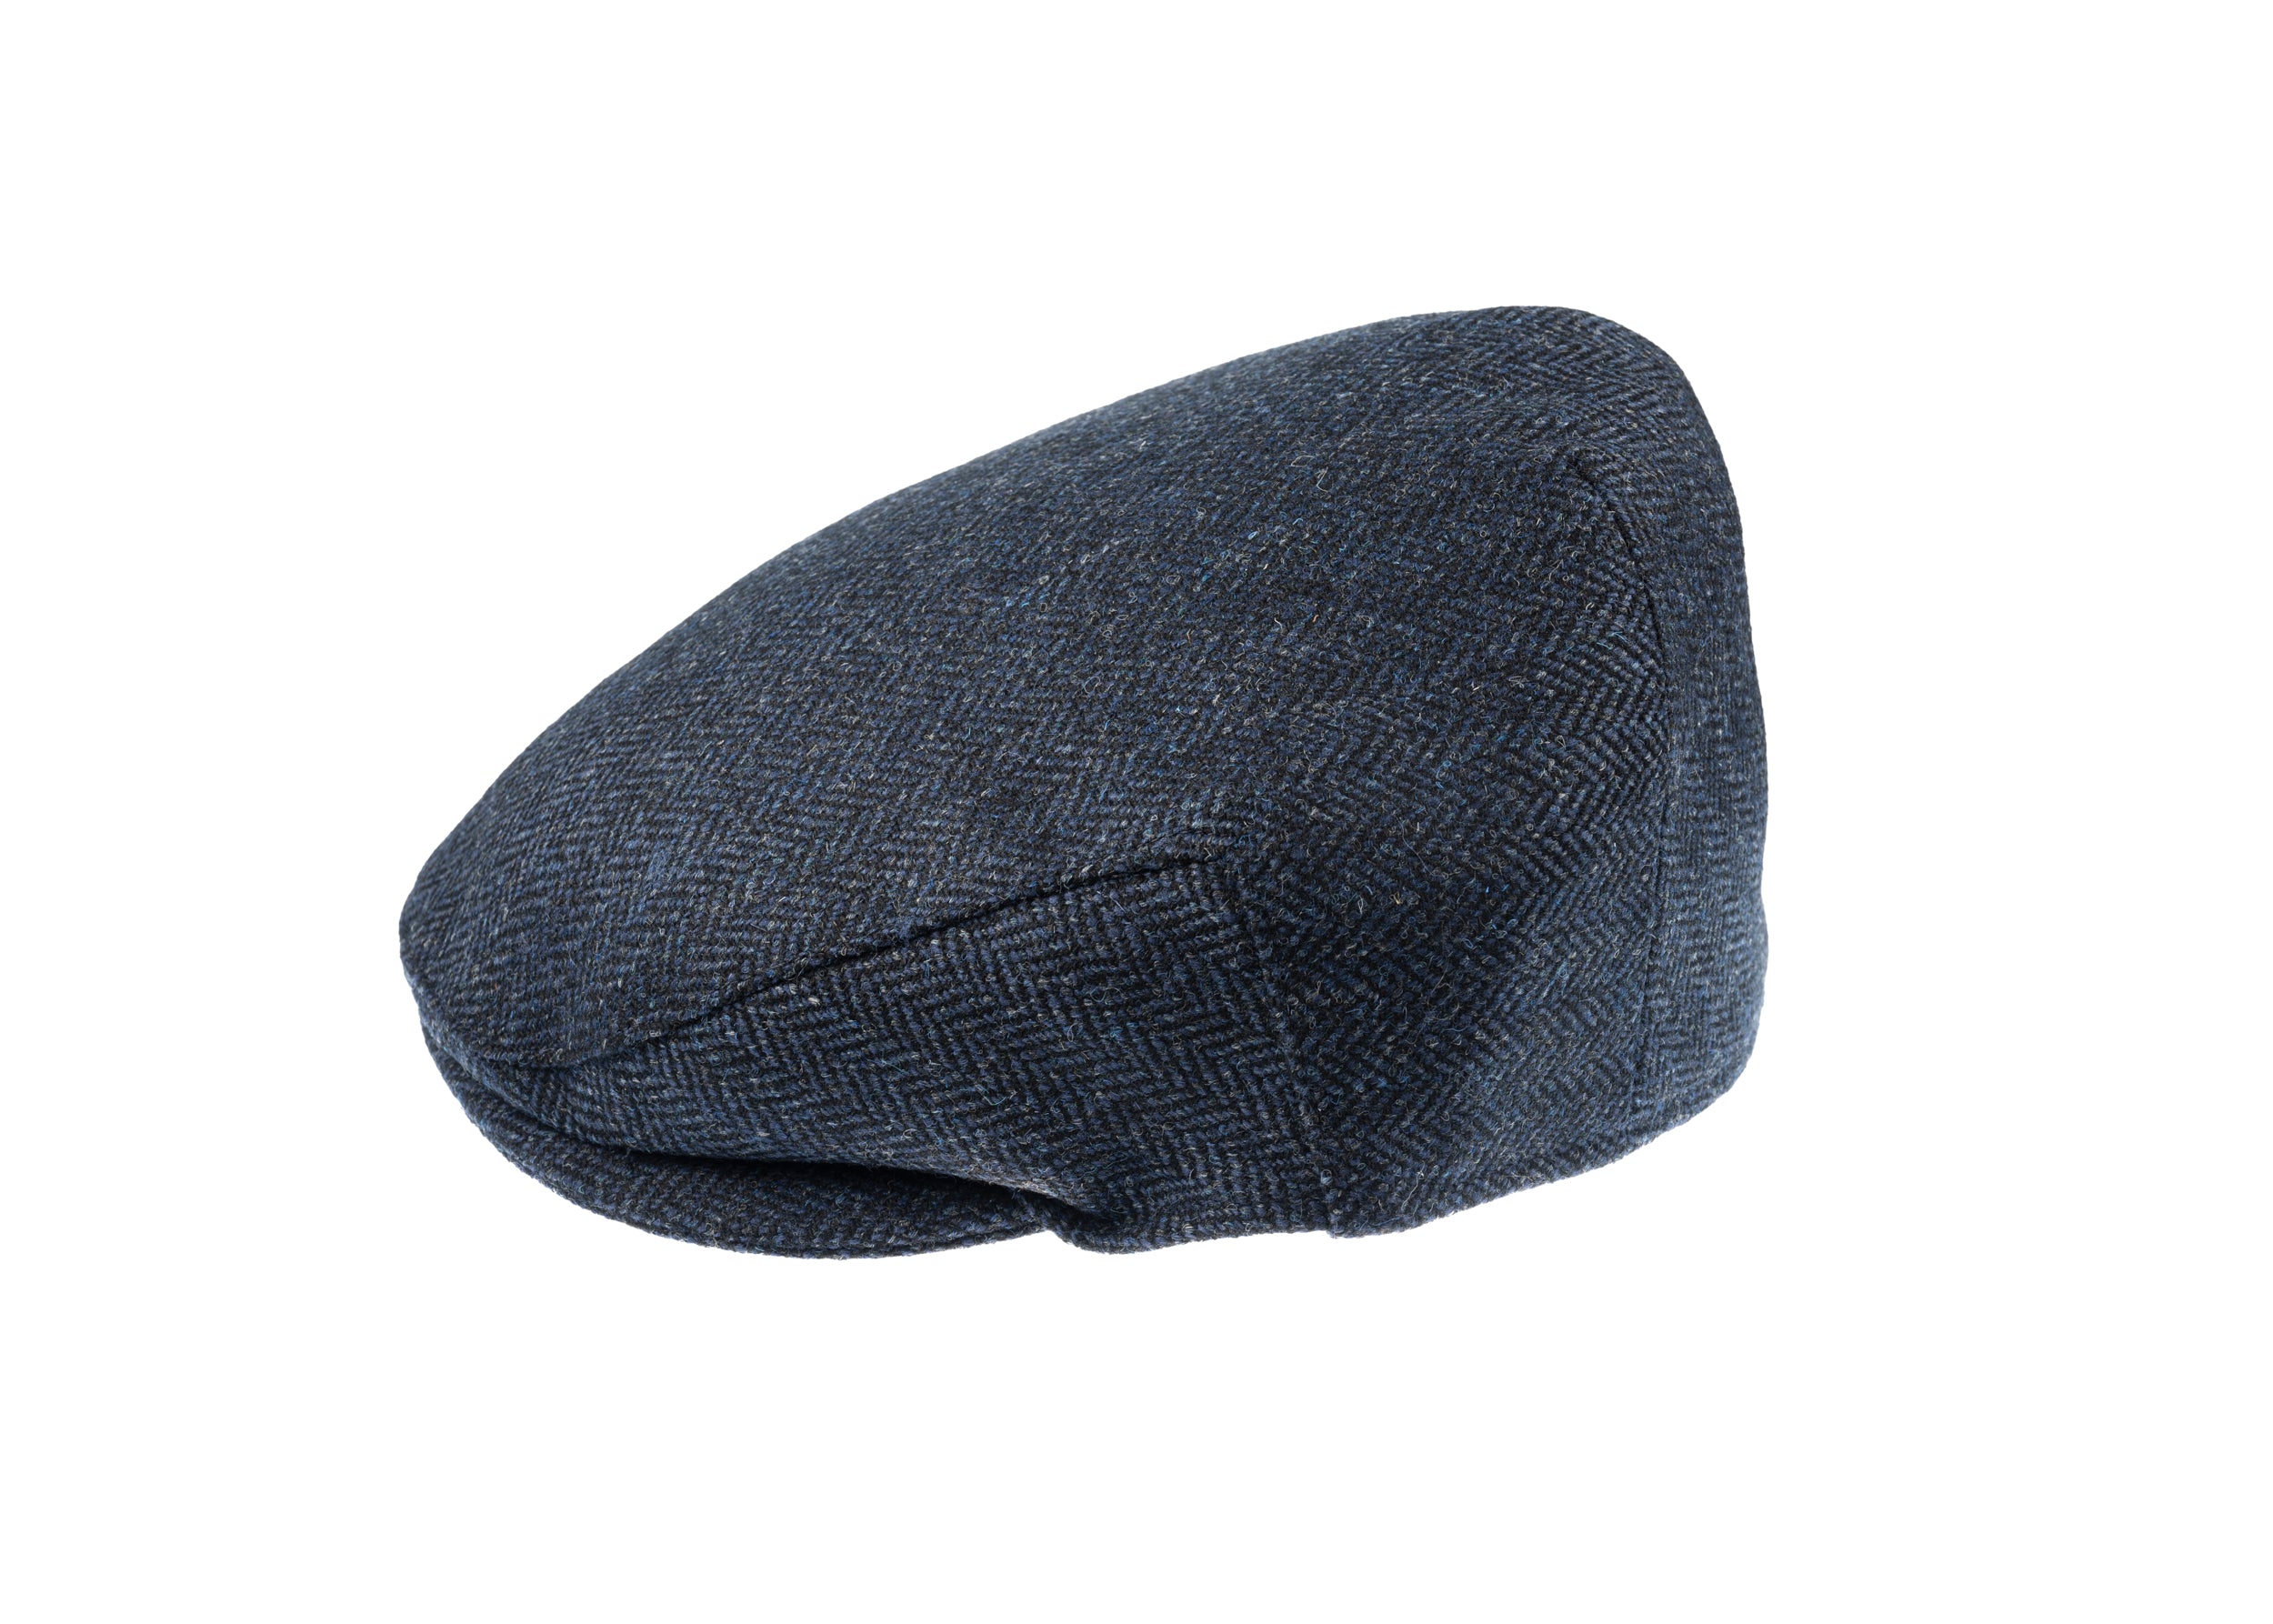 Balmoral Tweed Flat Cap in Z539